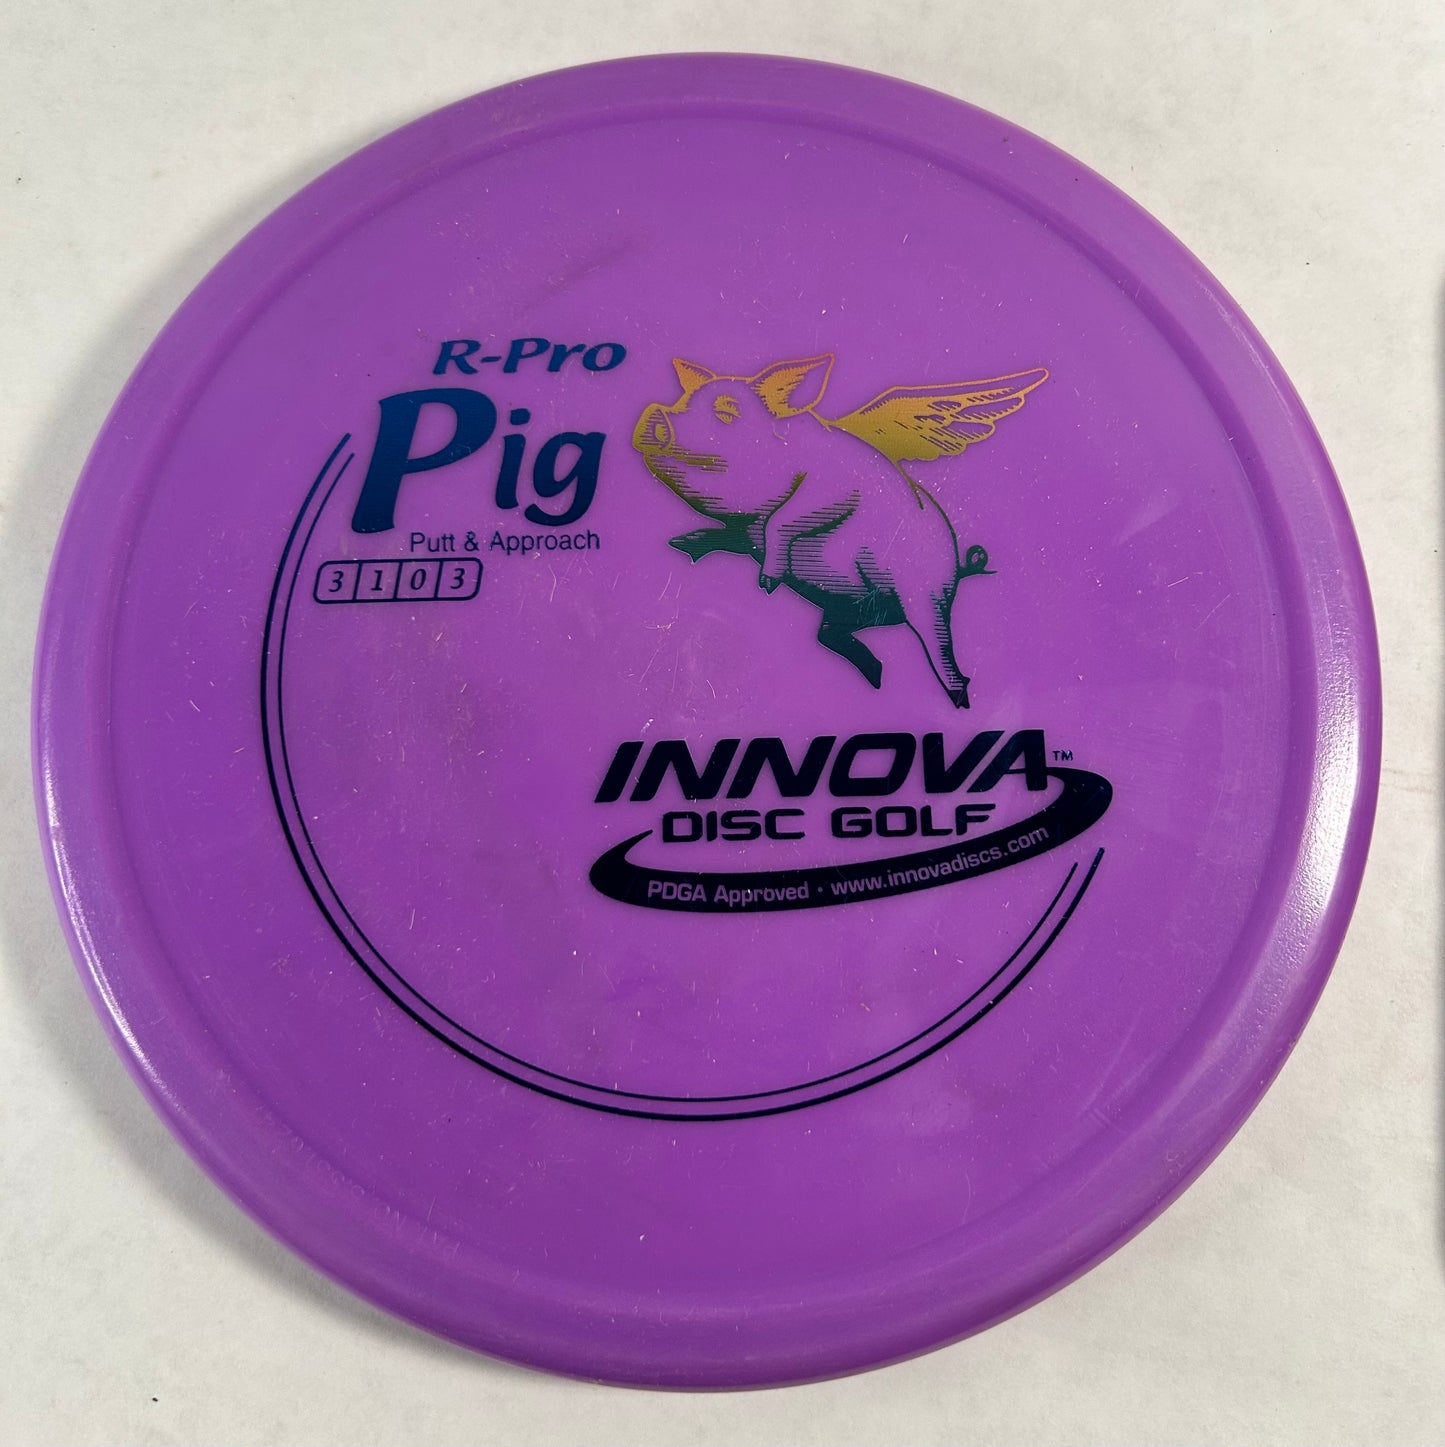 Pig - 7/10 - 175g